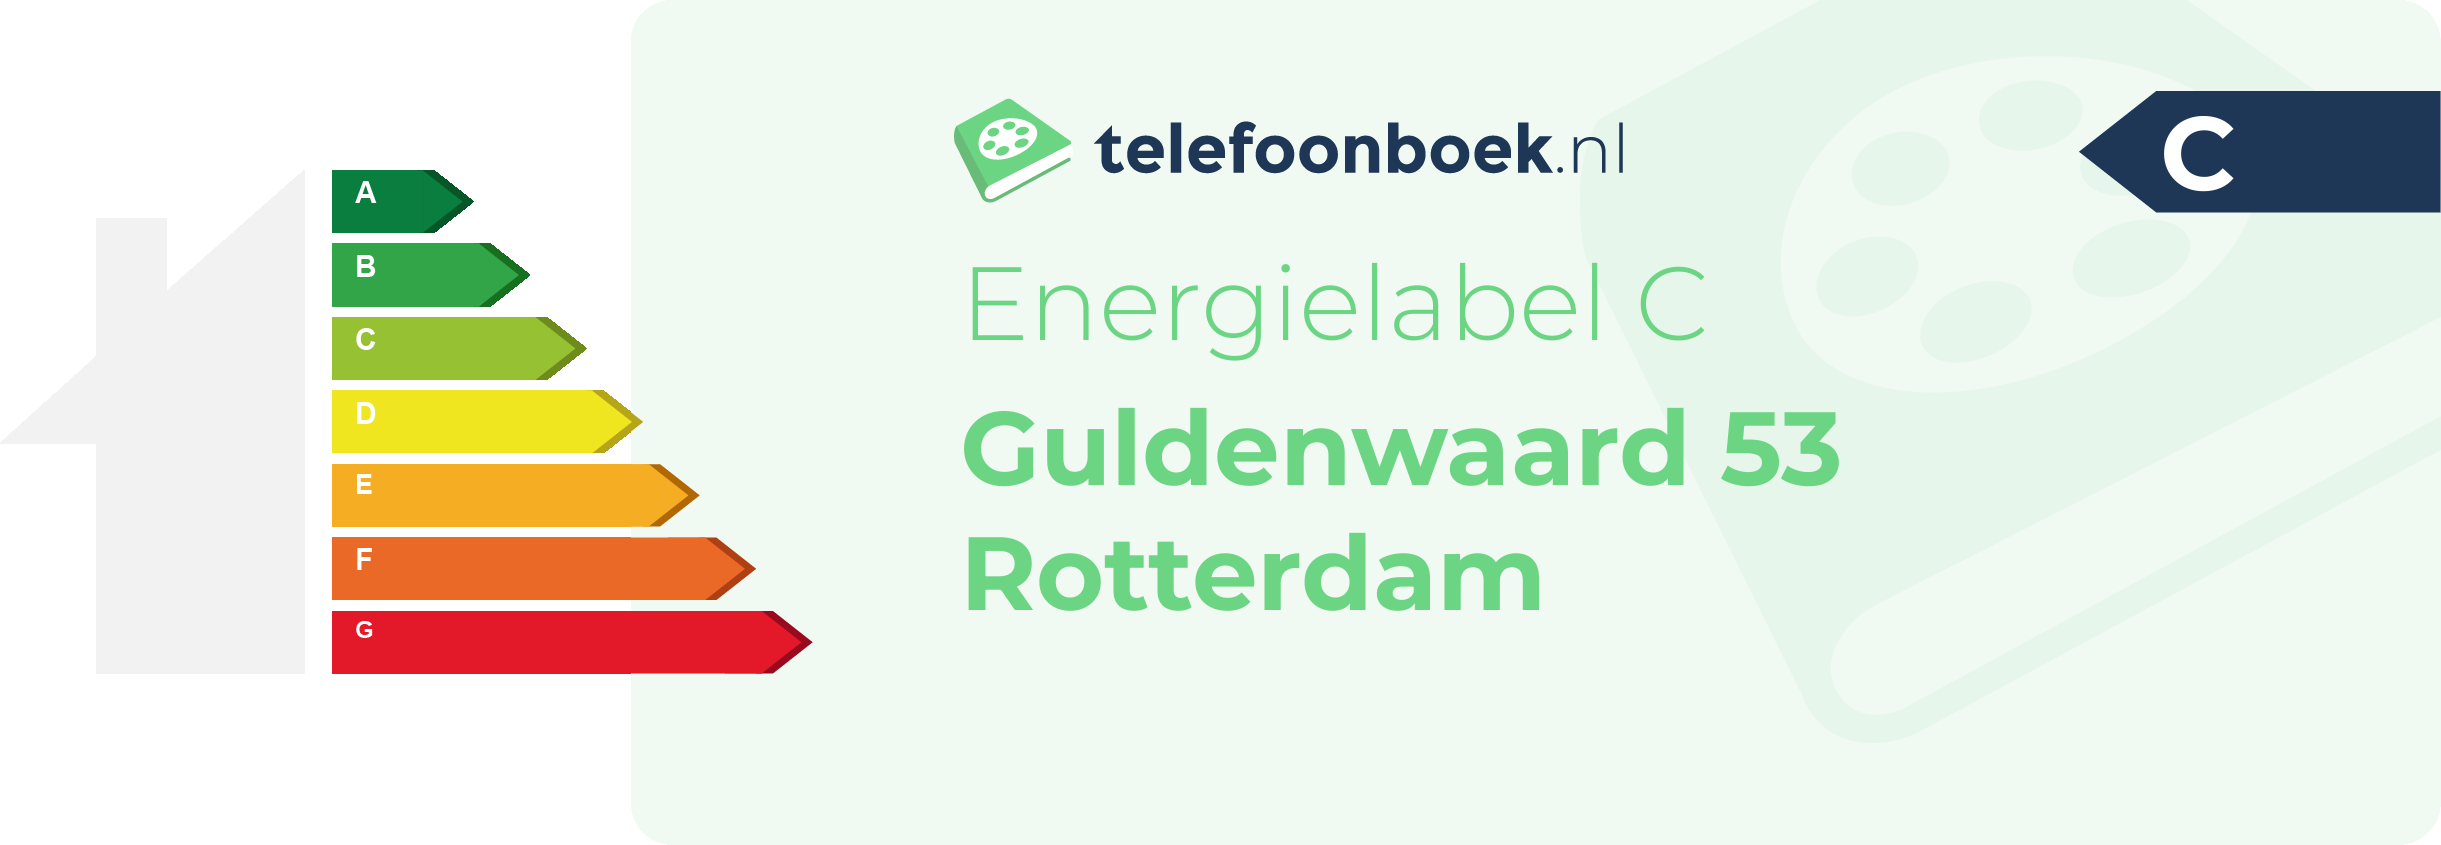 Energielabel Guldenwaard 53 Rotterdam